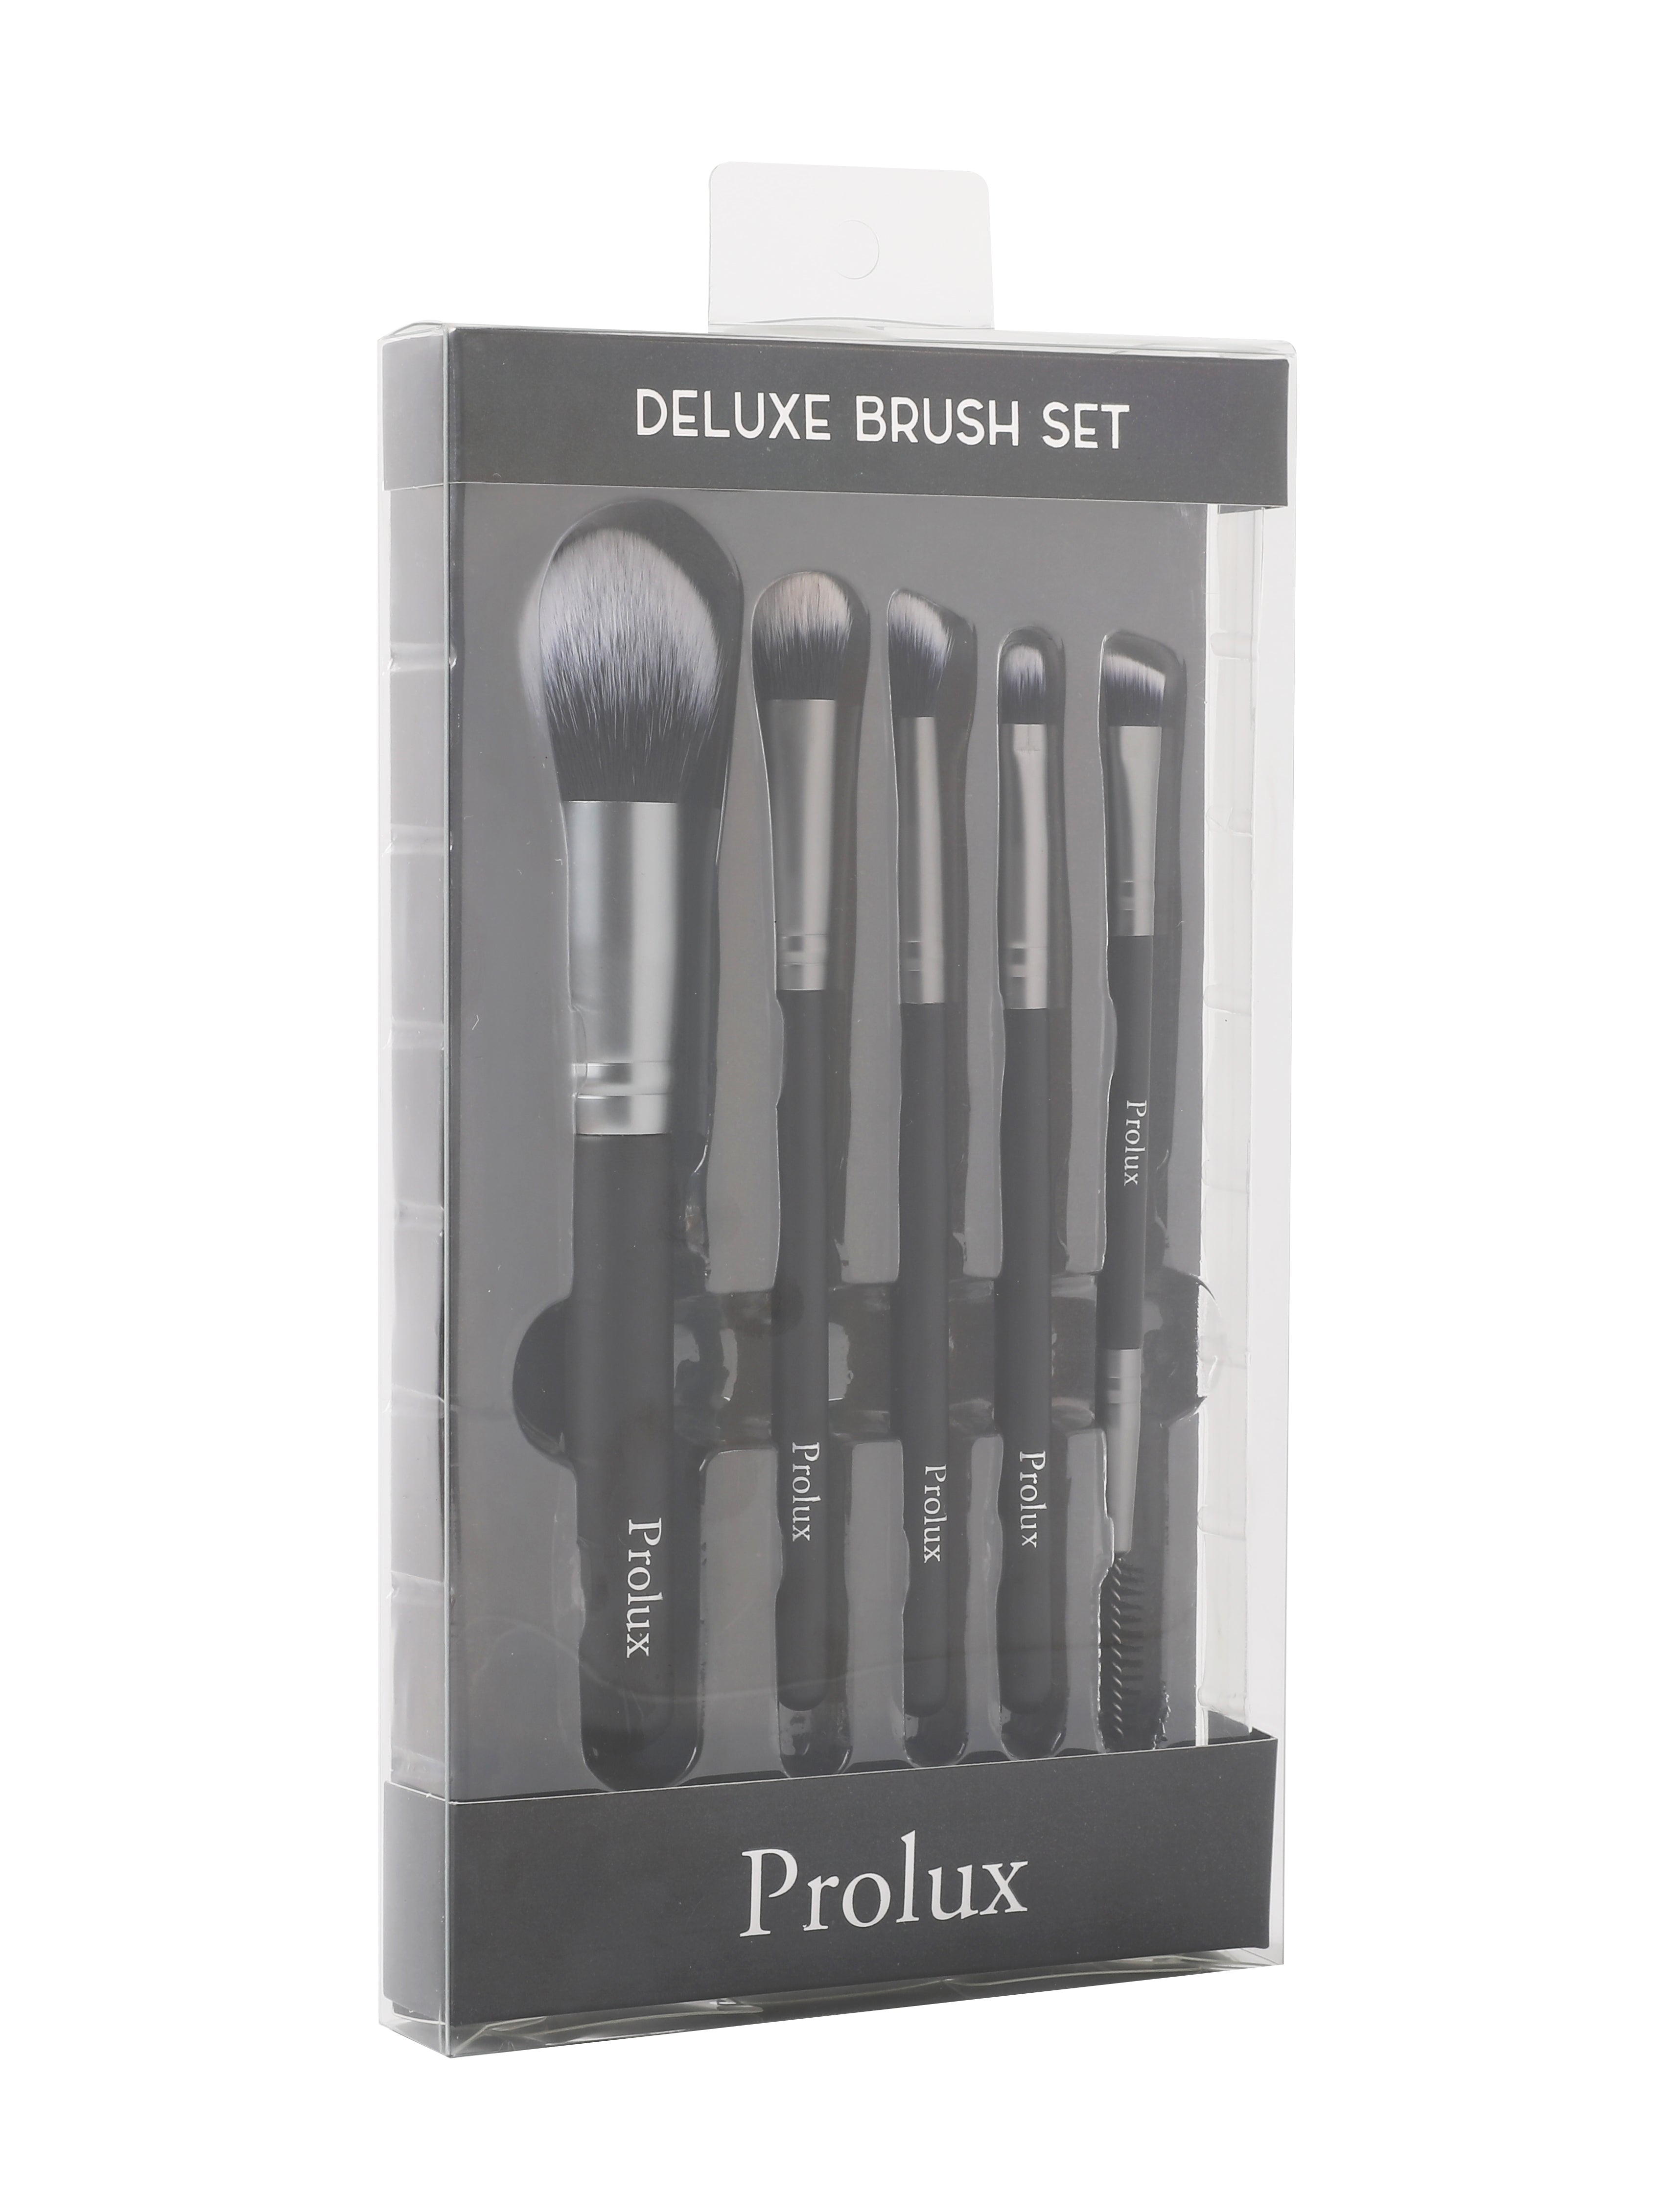 Prolux Deluxe Brush Set